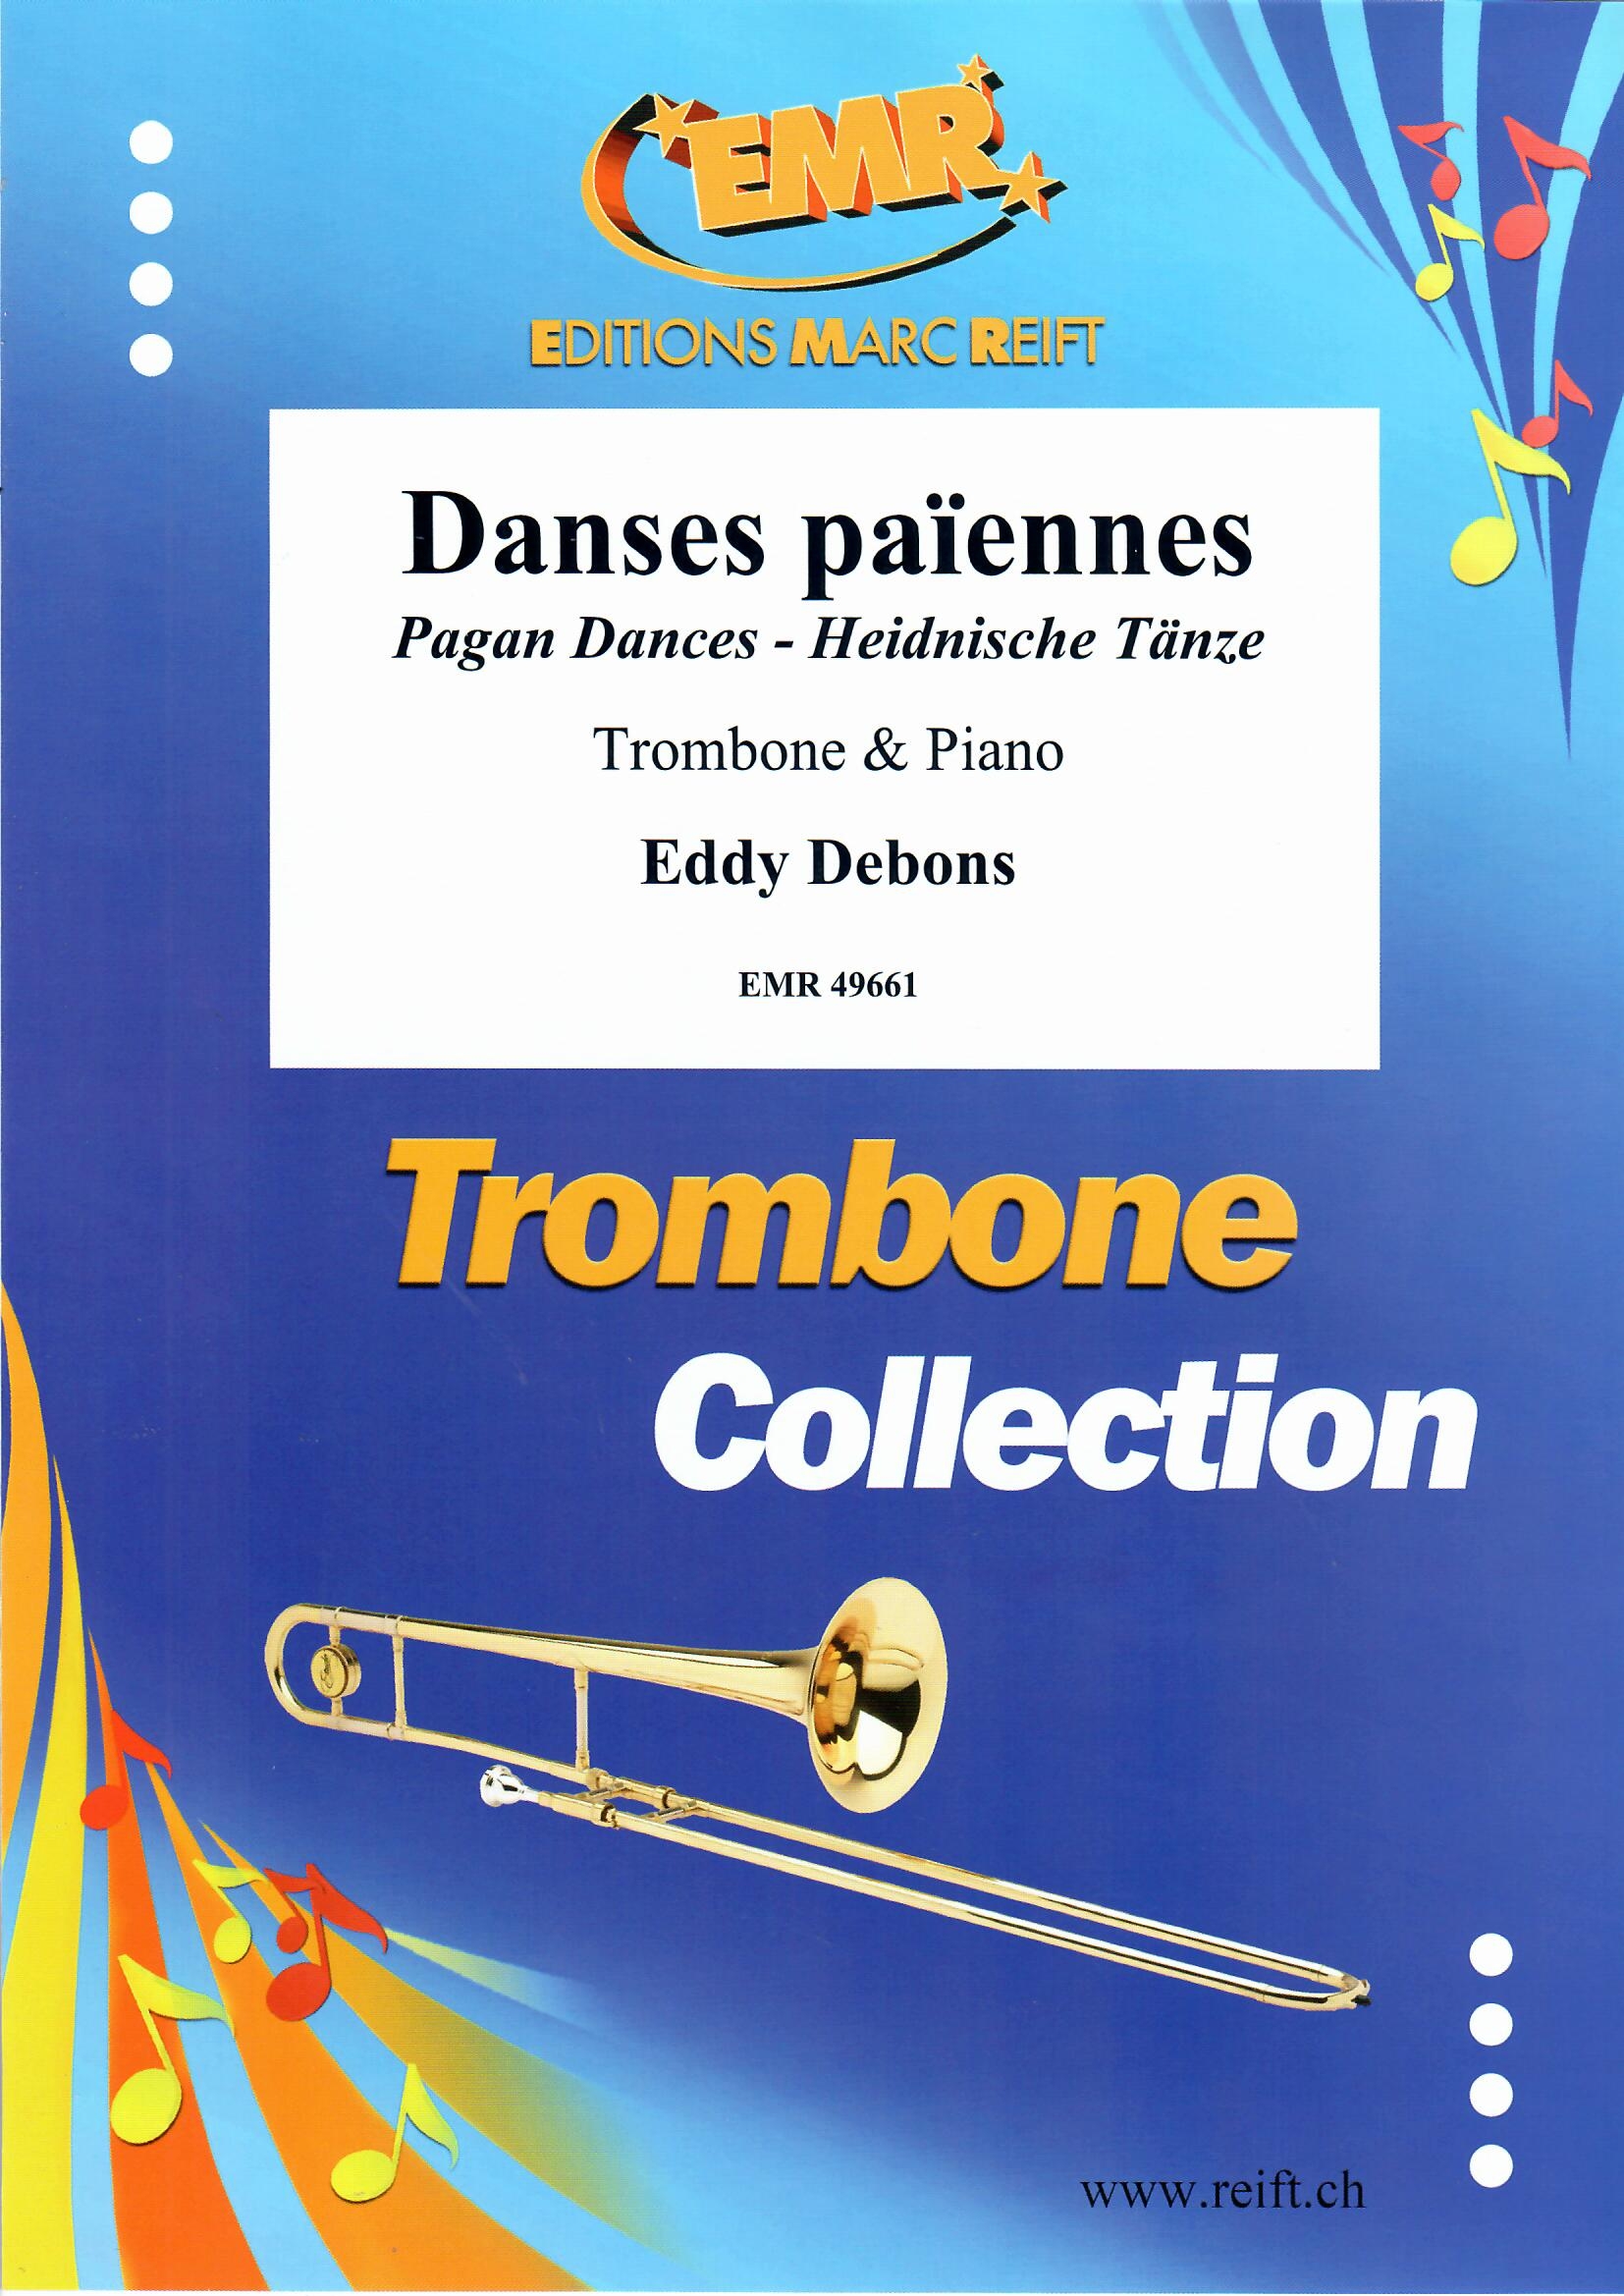 DANSES PAïENNES - Trombone & Piano, SOLOS - Trombone